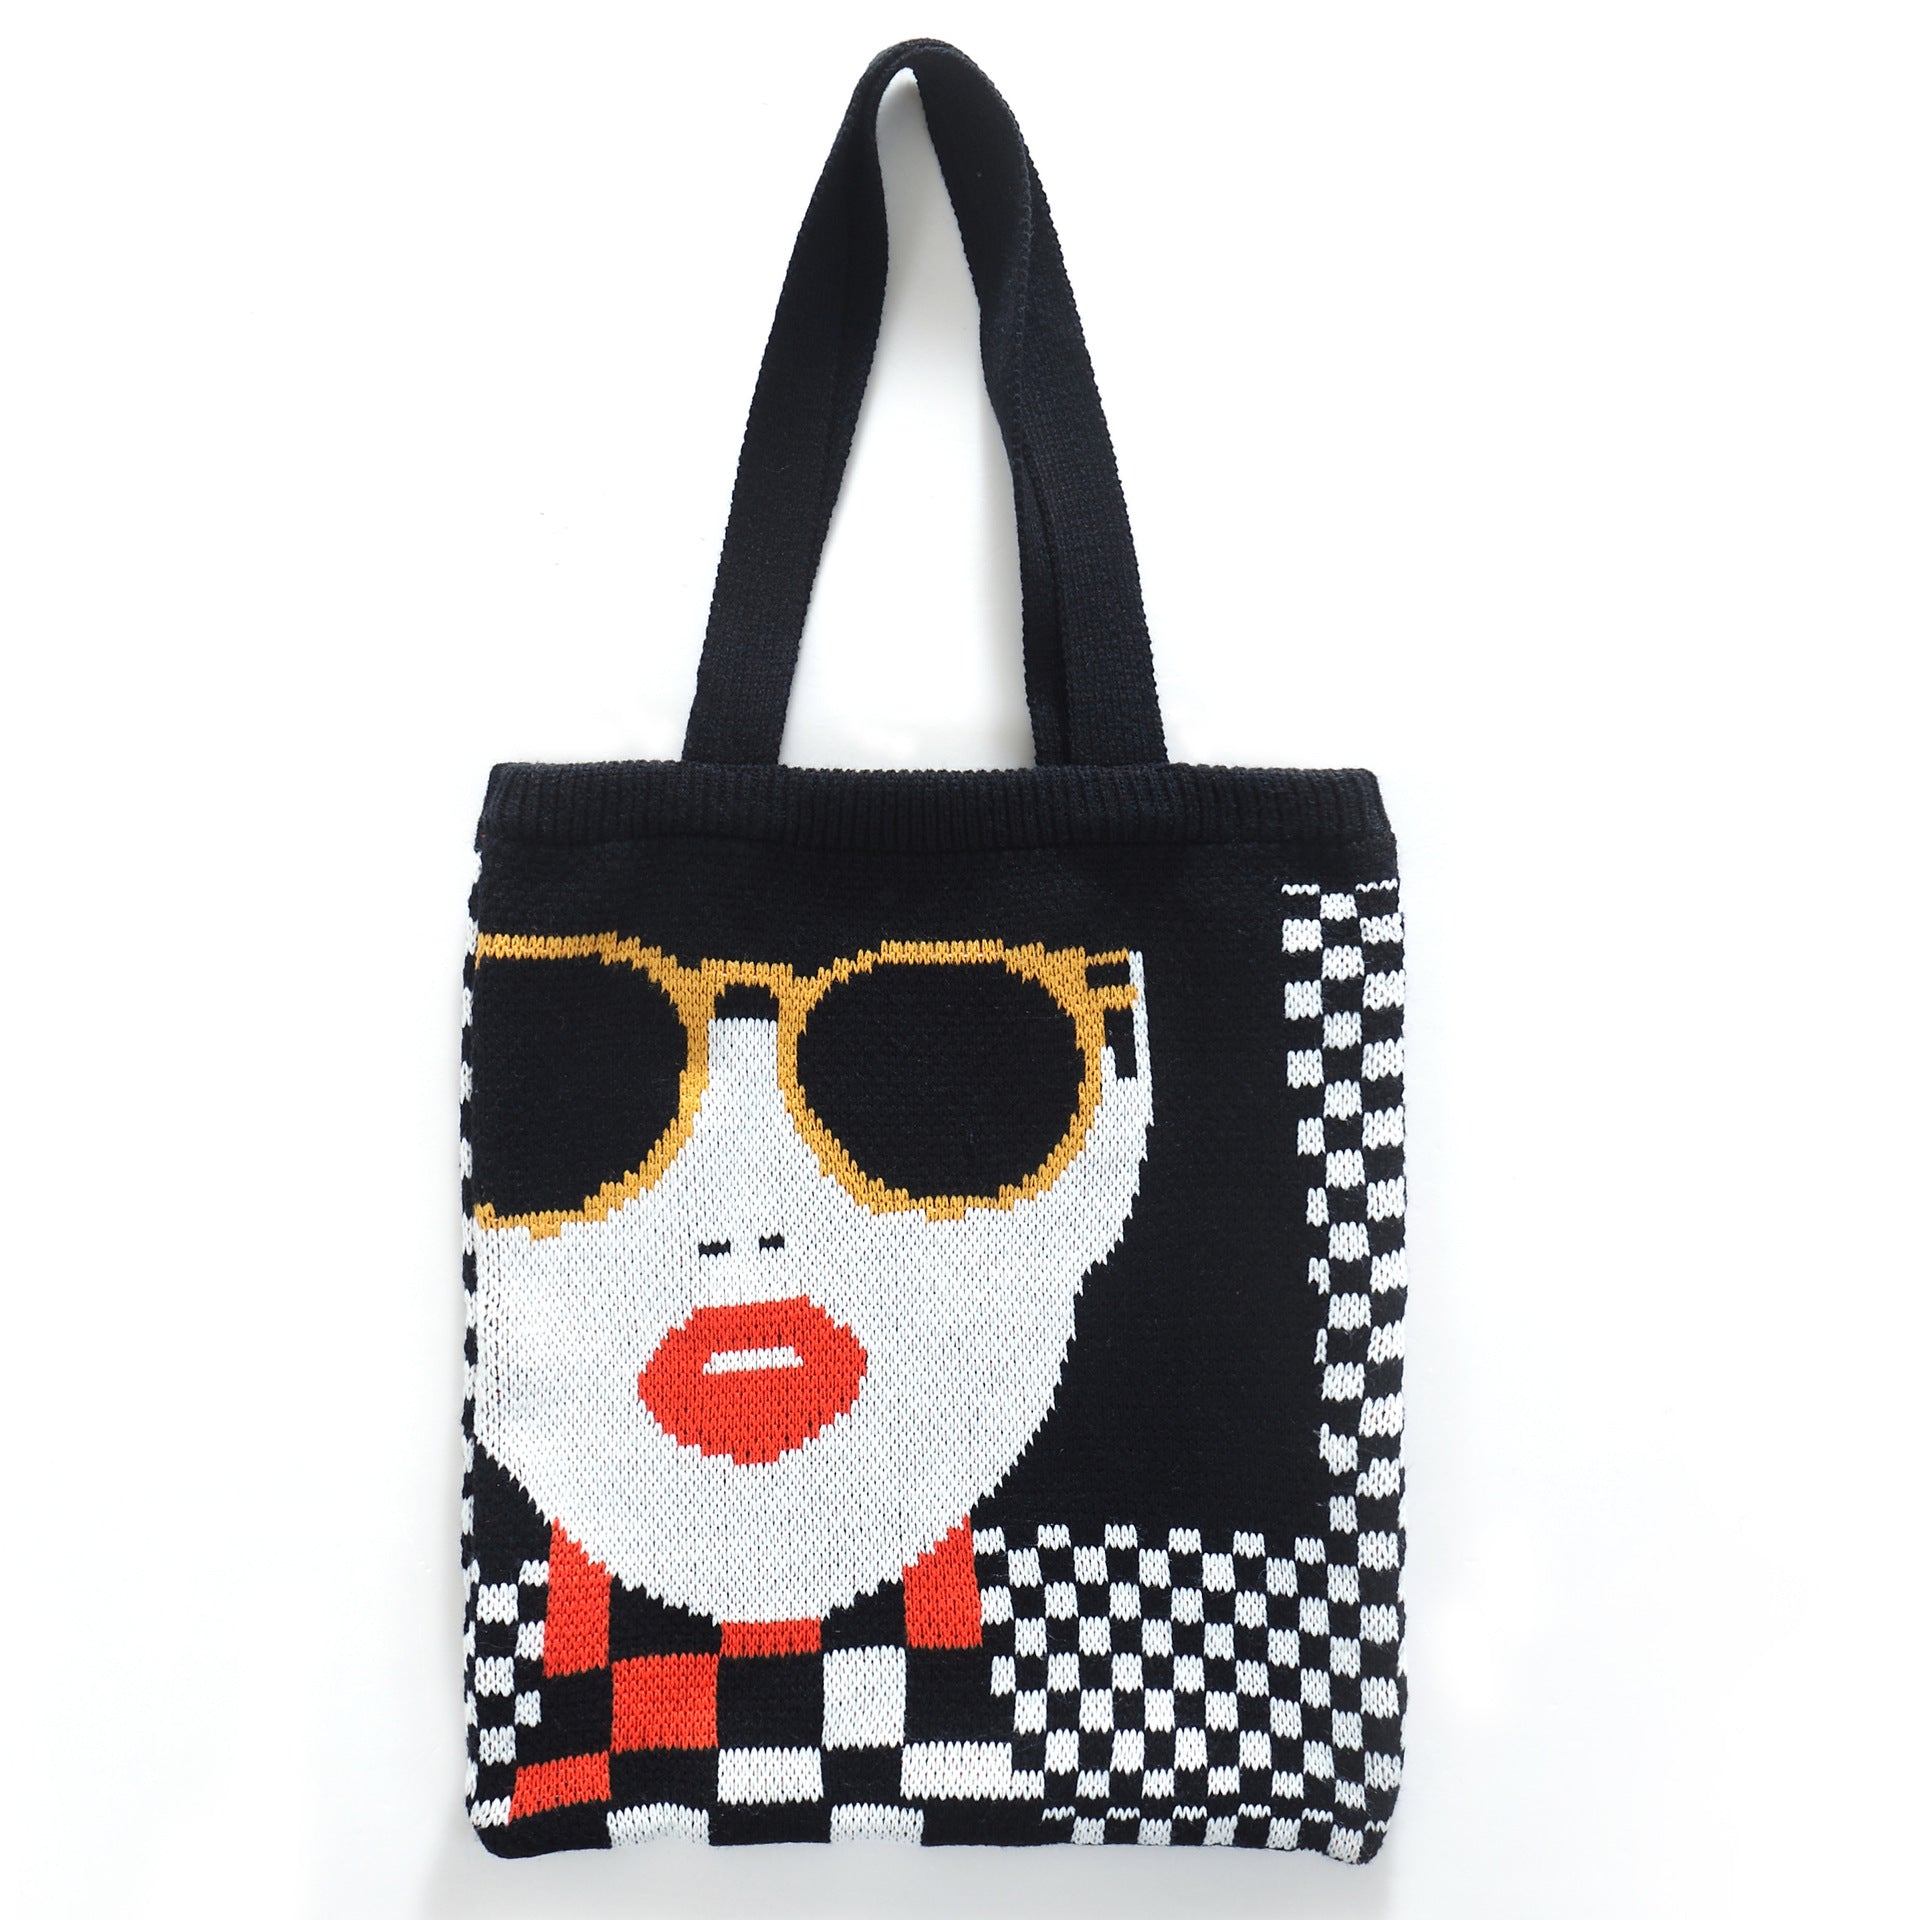 Sunglasses girl bag